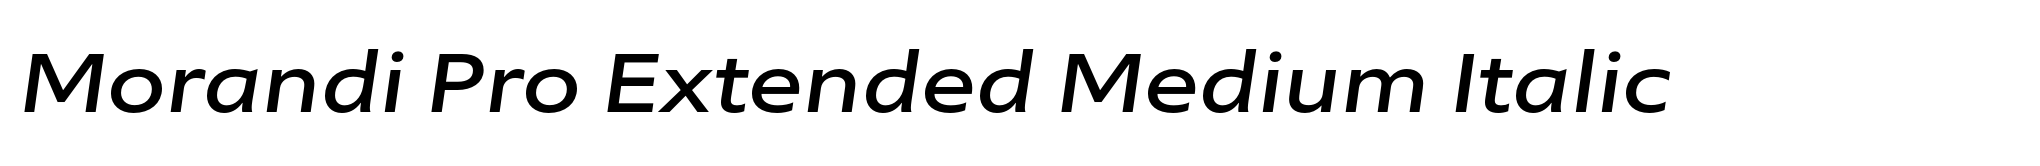 Morandi Pro Extended Medium Italic image